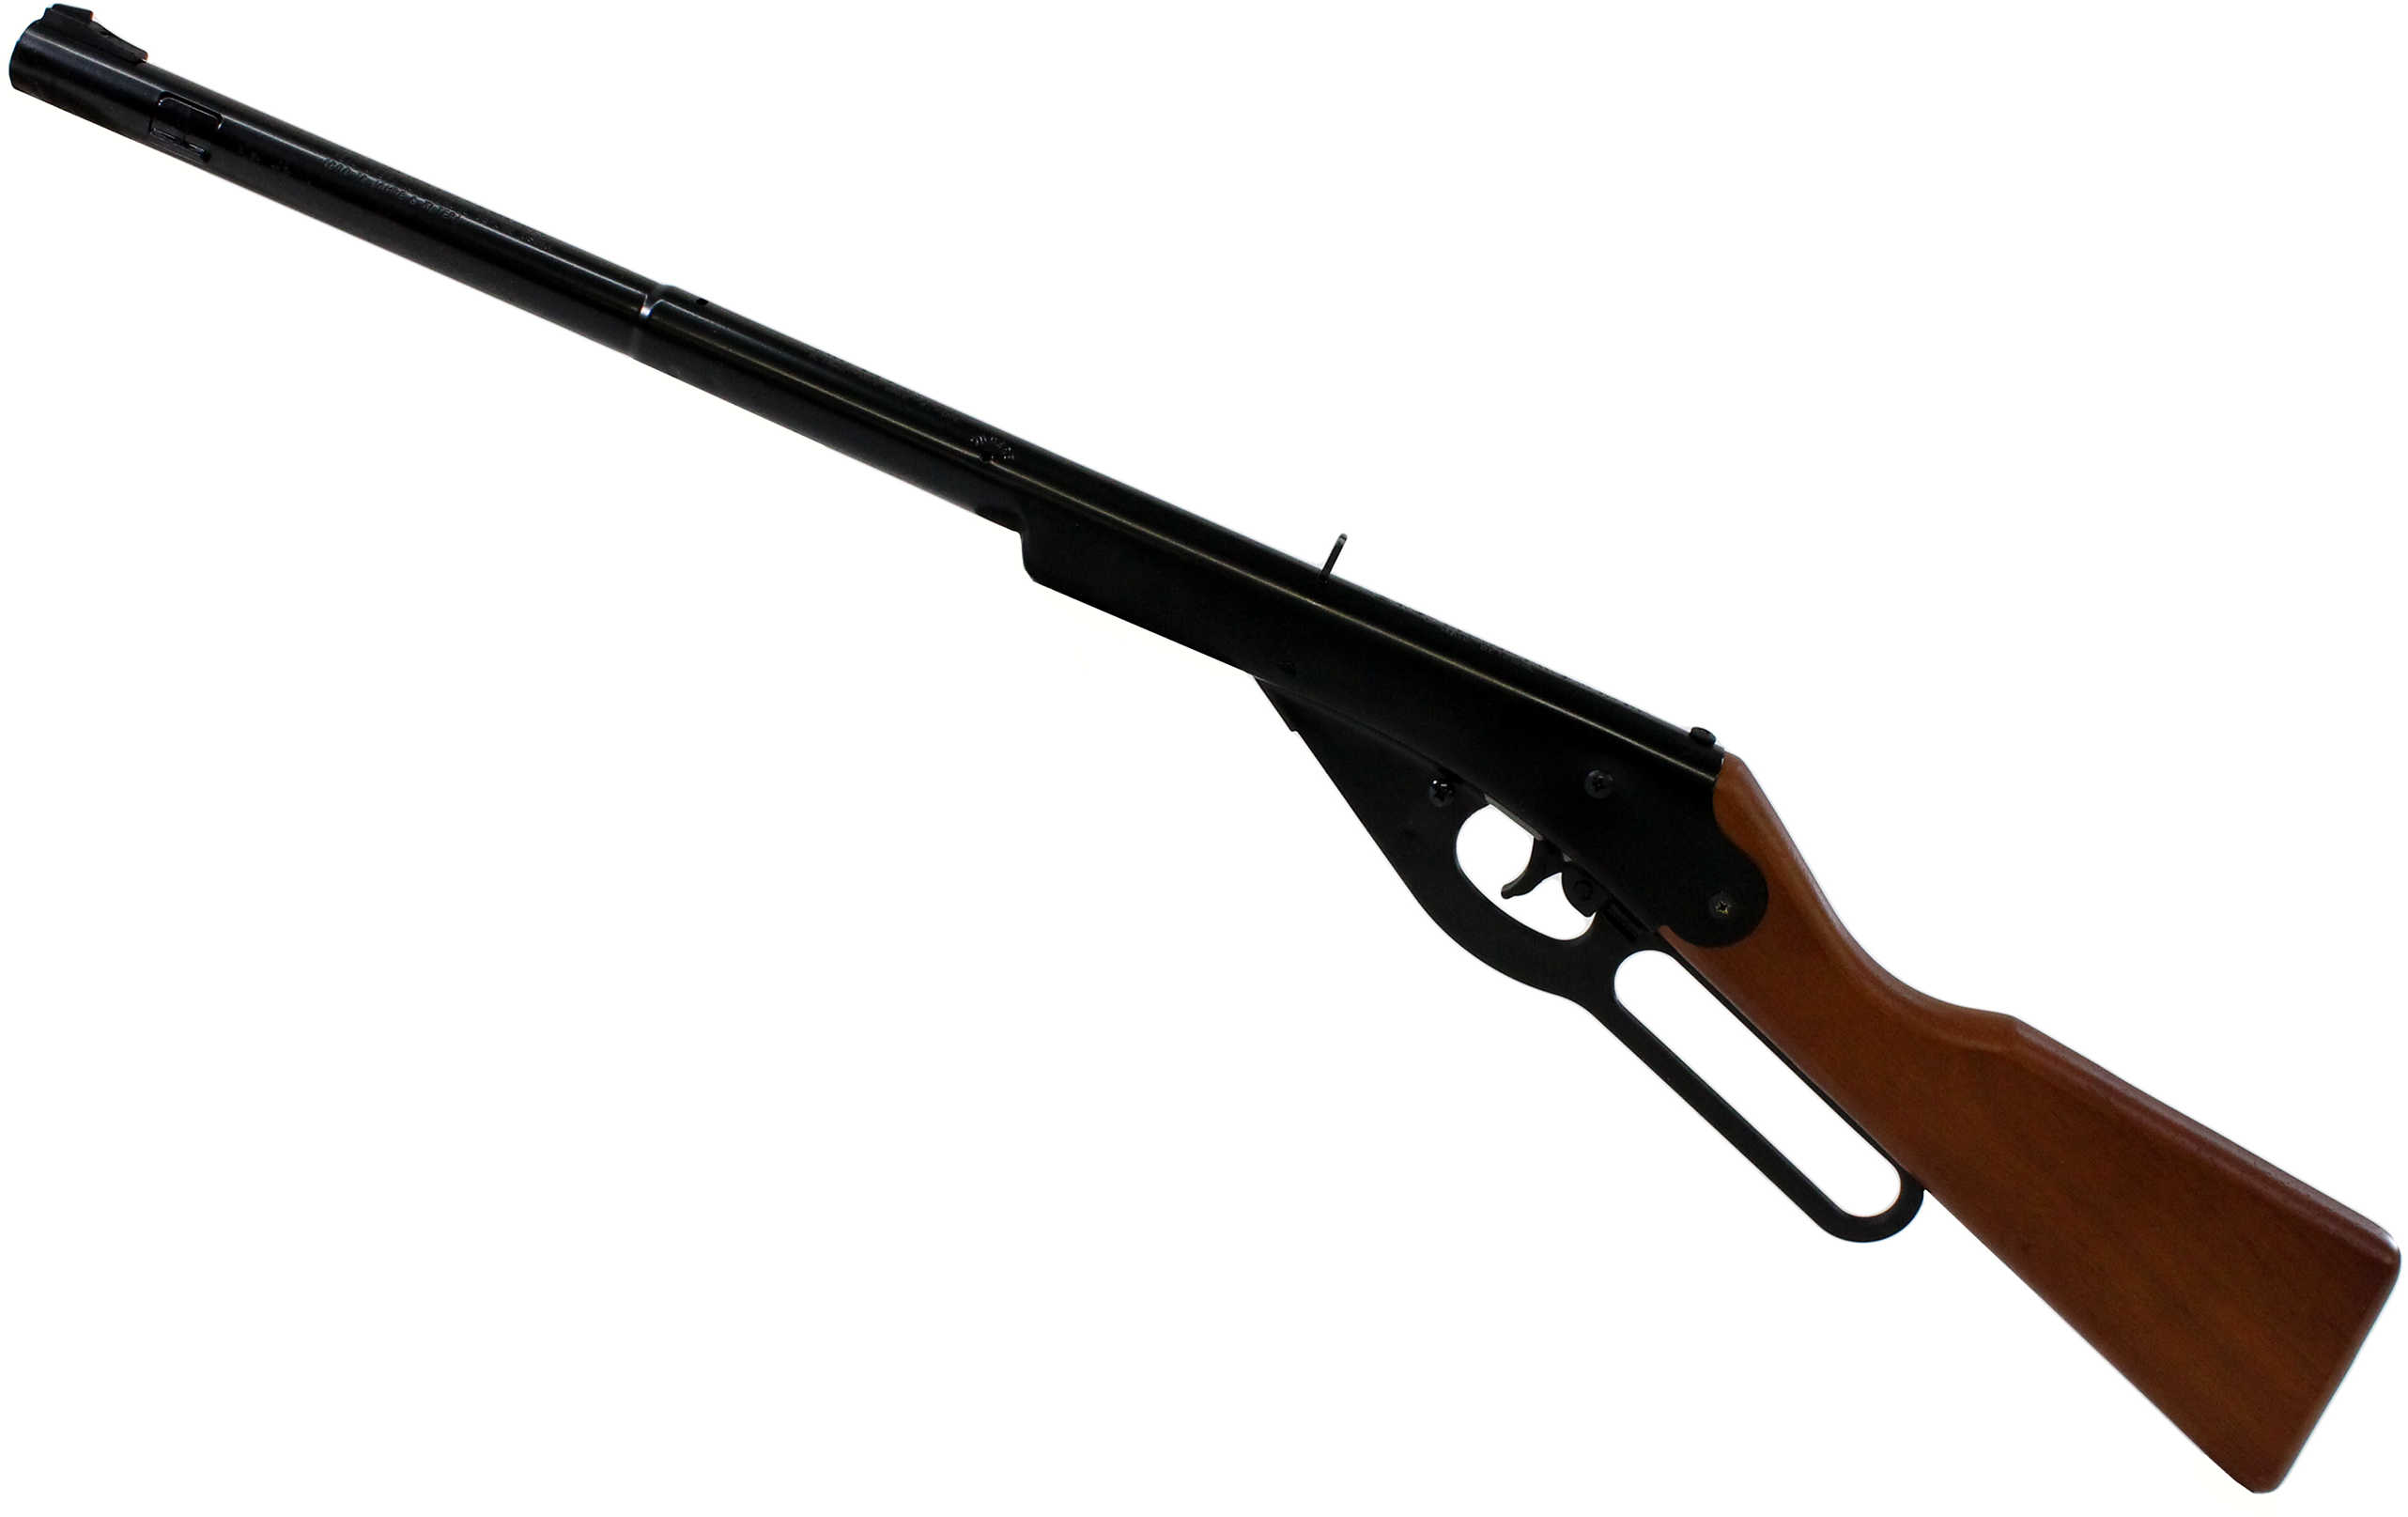 Daisy Model Buck Air Rifle Bb Black Finish Wood Stock Lever